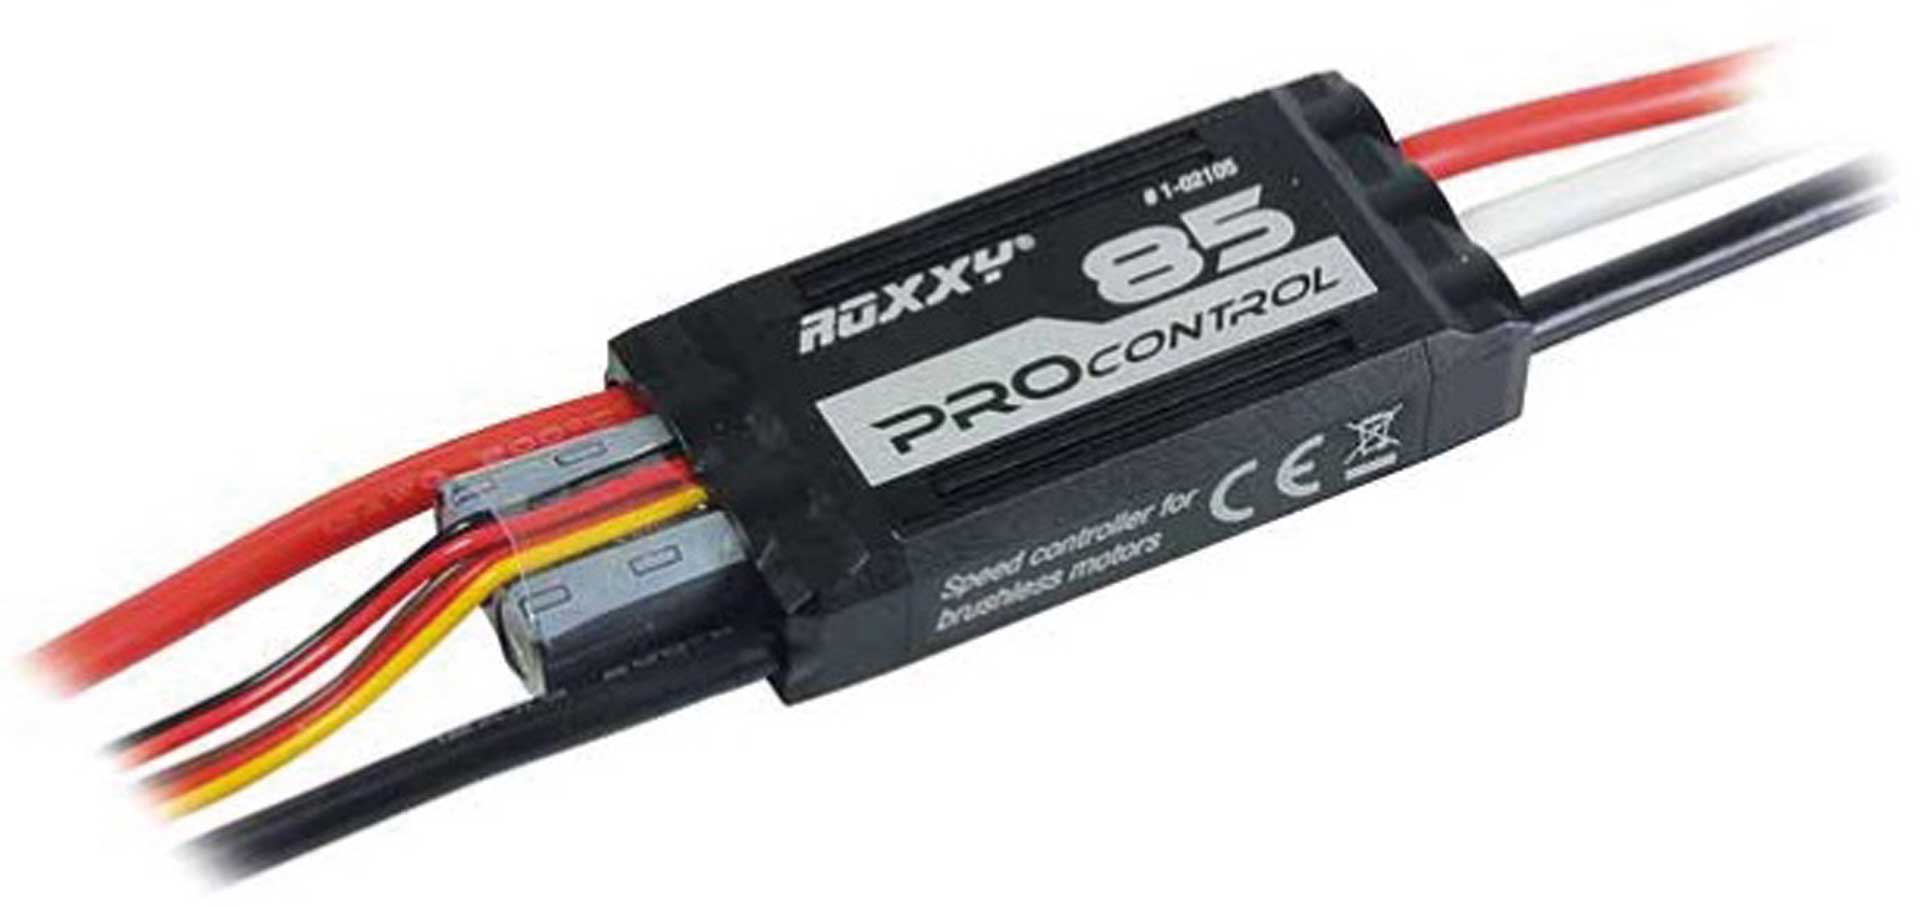 ROXXY PROcontrol 85/8A S-BEC Brushless Regler